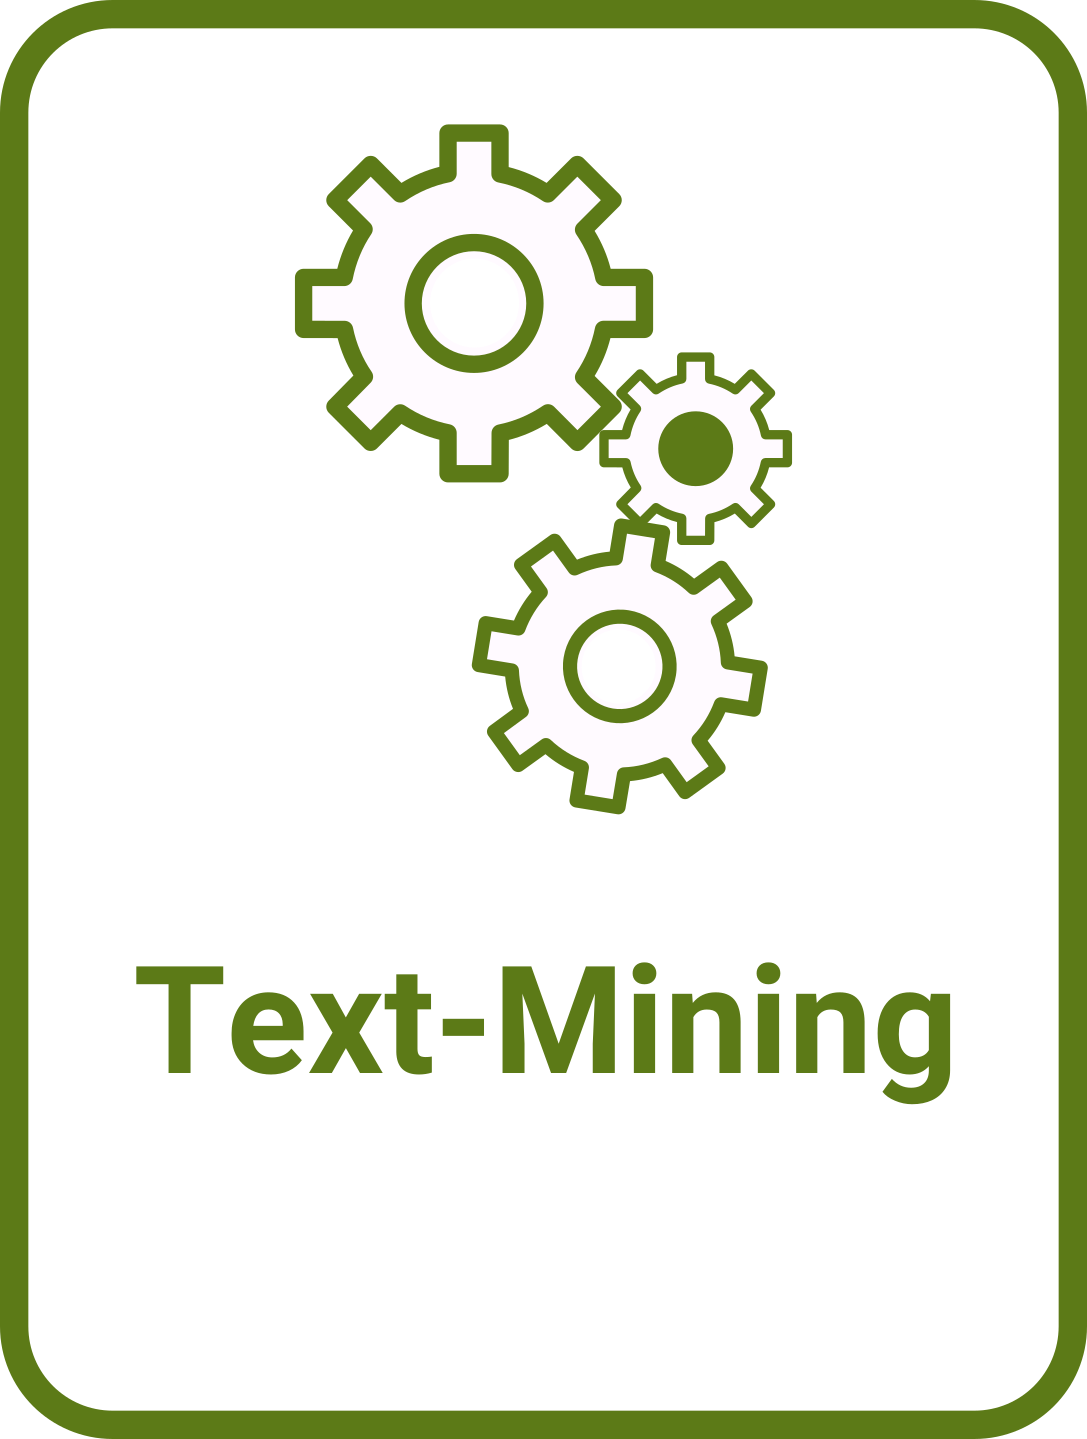 Text-Mining